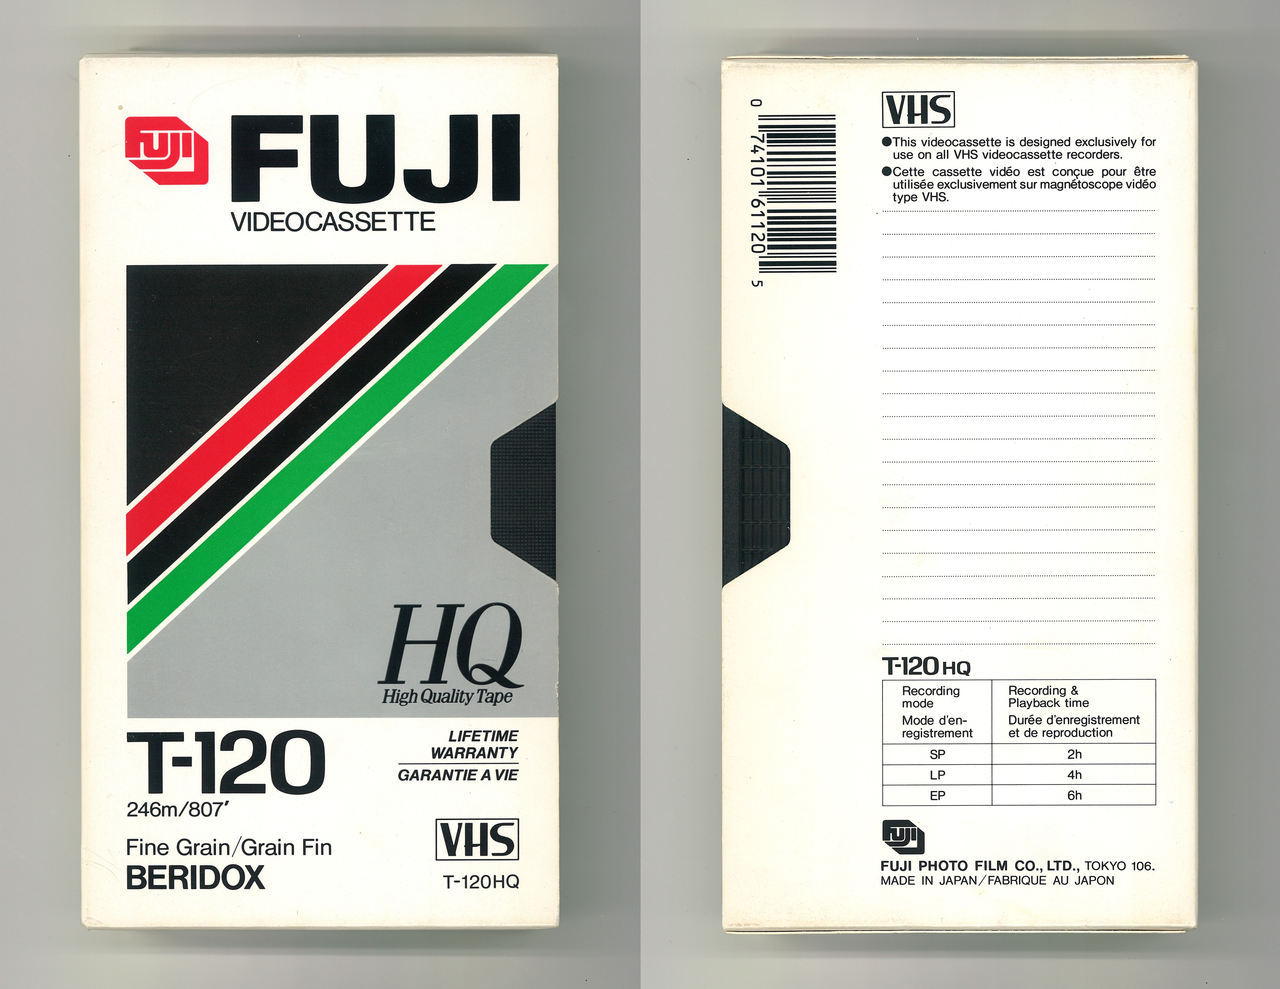 Ltd Fujifilm Hq T-120 Vhs Videocassette 2 Hour Product Category: Audio/Video Media/Videocassettes Vhs Fuji Photo Film Co 